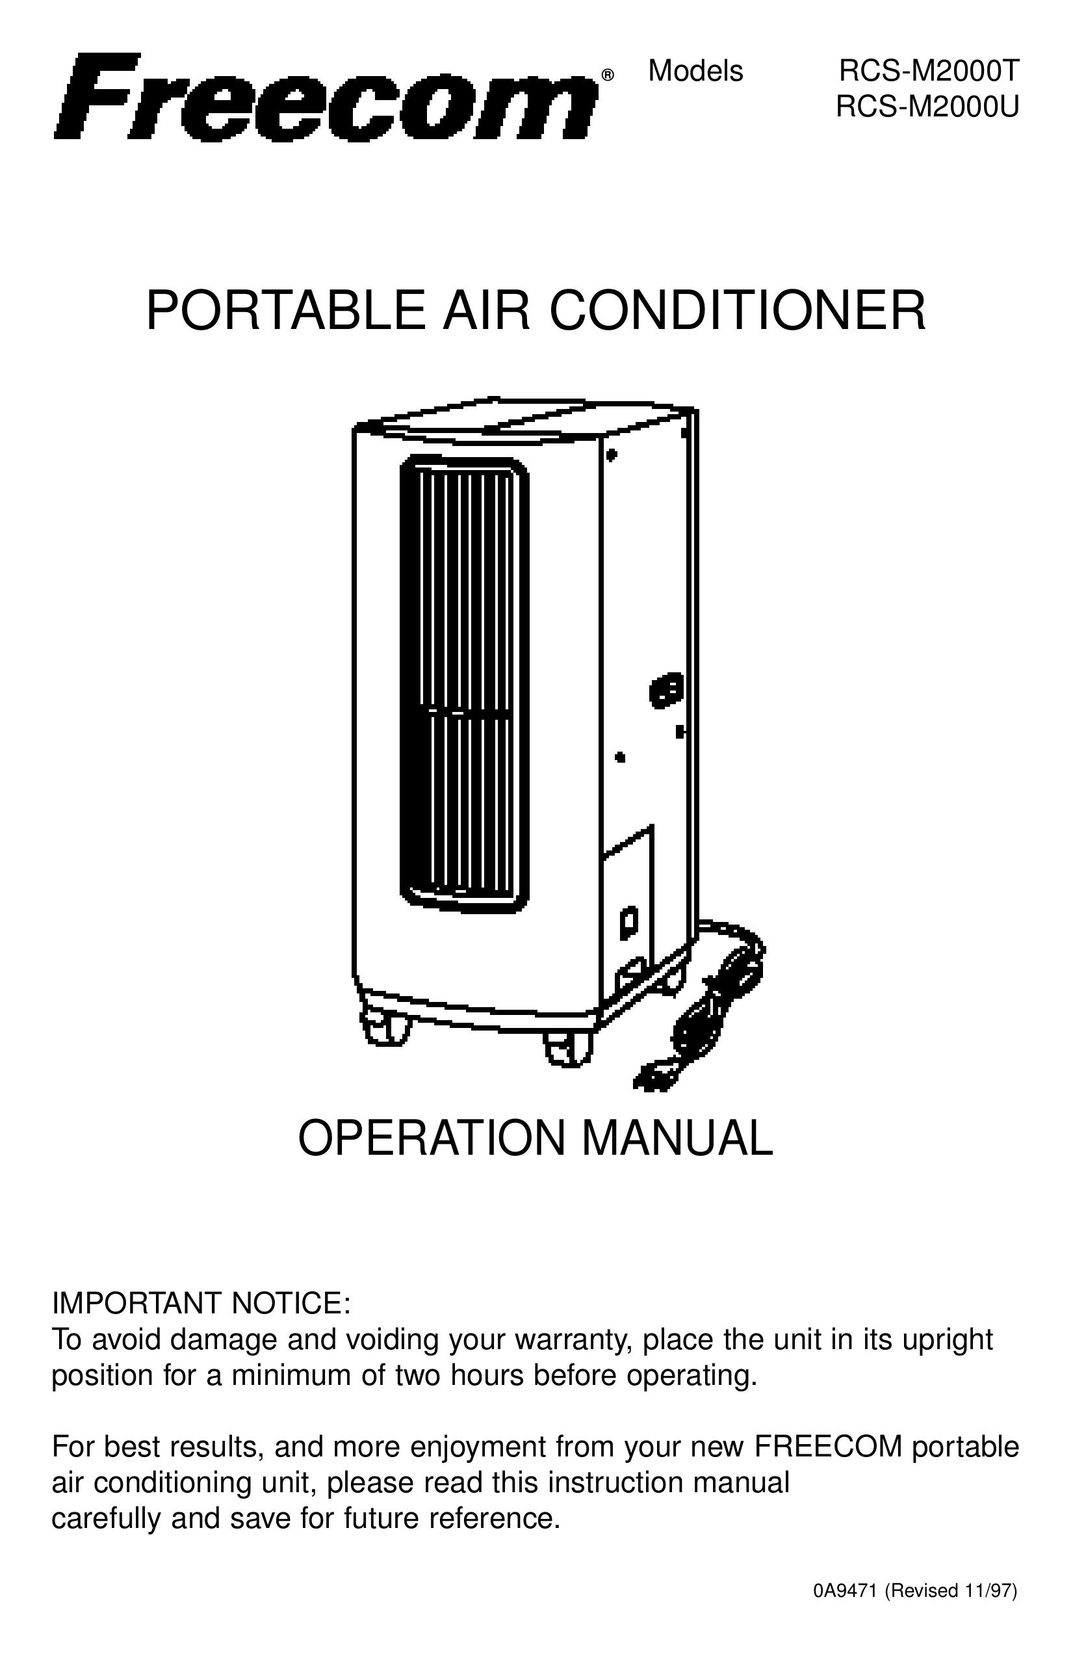 Freecom Technologies RCS-M2000U Air Conditioner User Manual (Page 1)